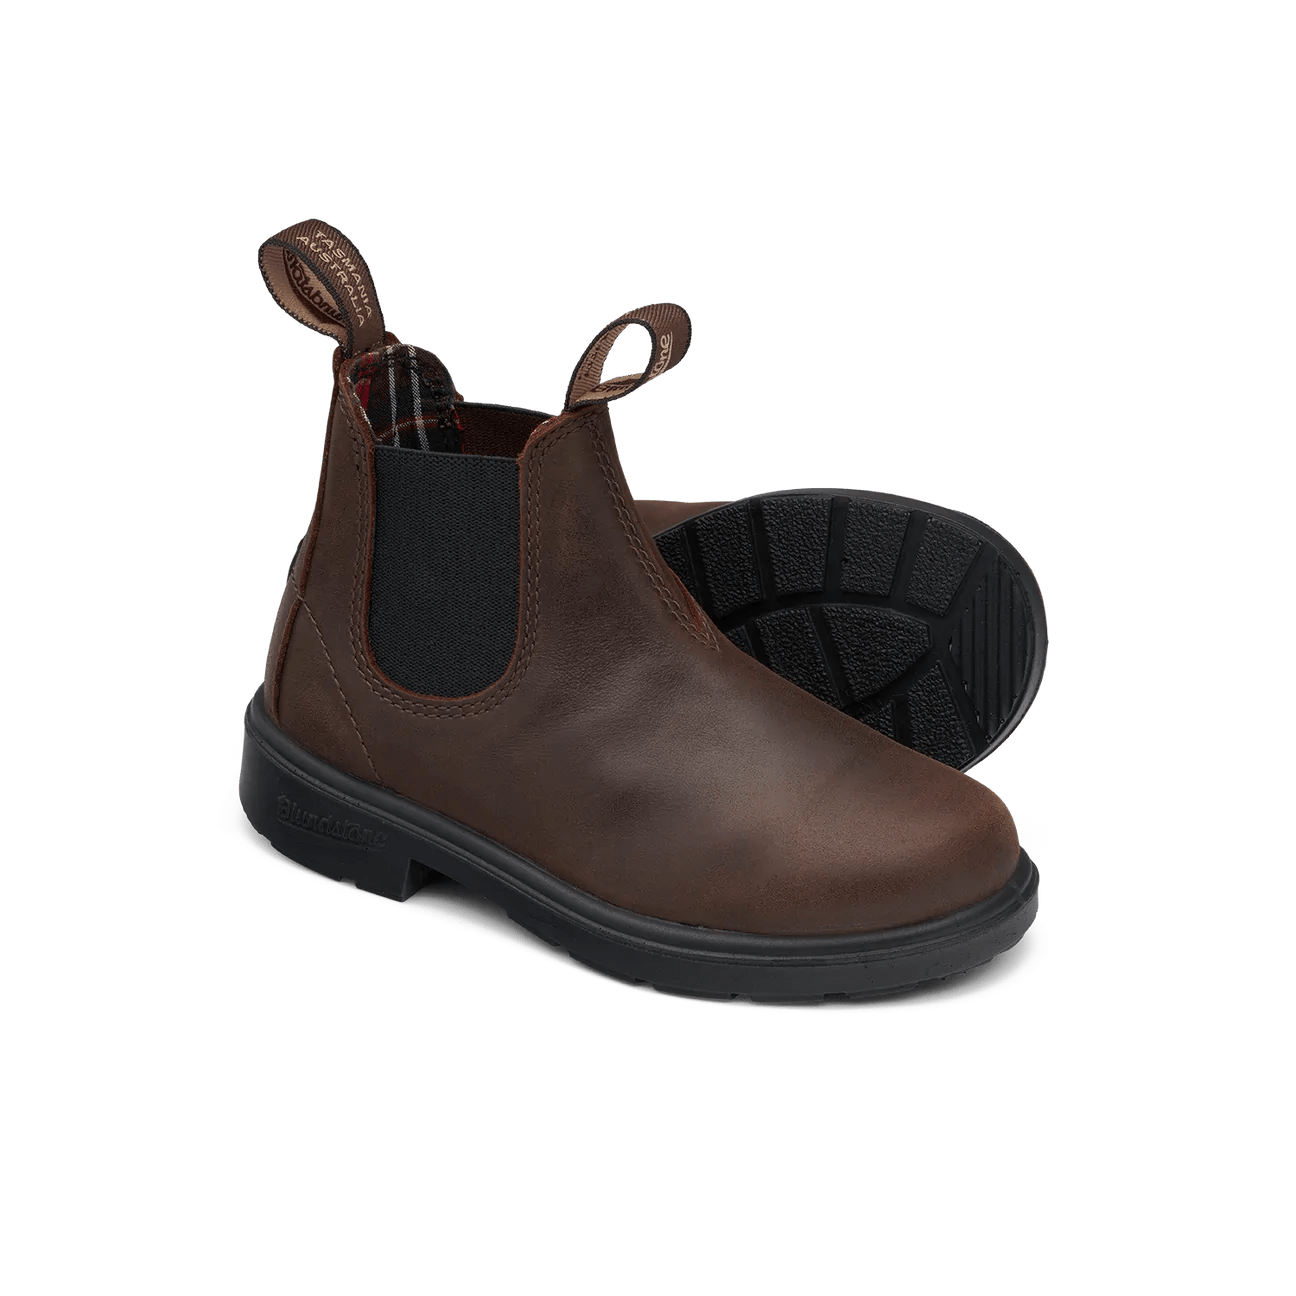 Blundstone boots Blundstone 1468 - Kids Antique Brown